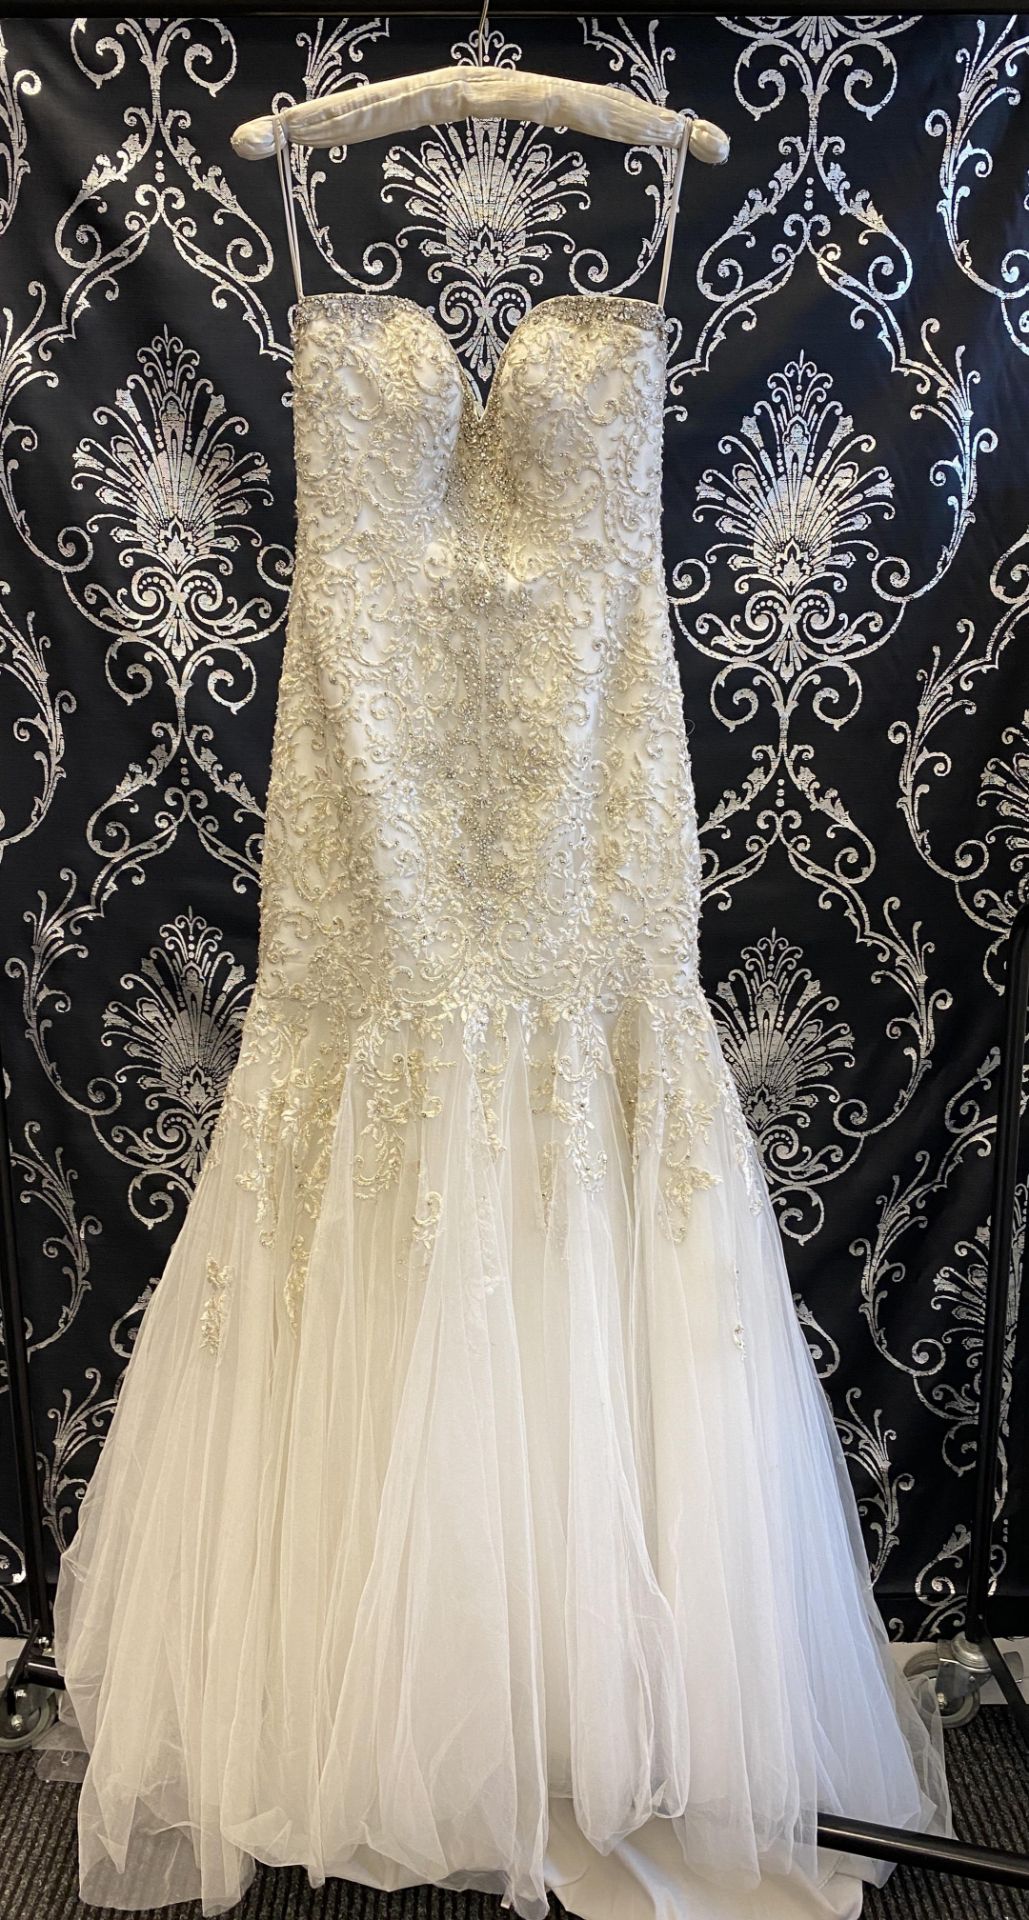 1 x ALLURE '9275' Timeless Strapless Lace And Chiffon Mermaid Designer Wedding Dress RRP £2,250 UK12 - Image 8 of 11